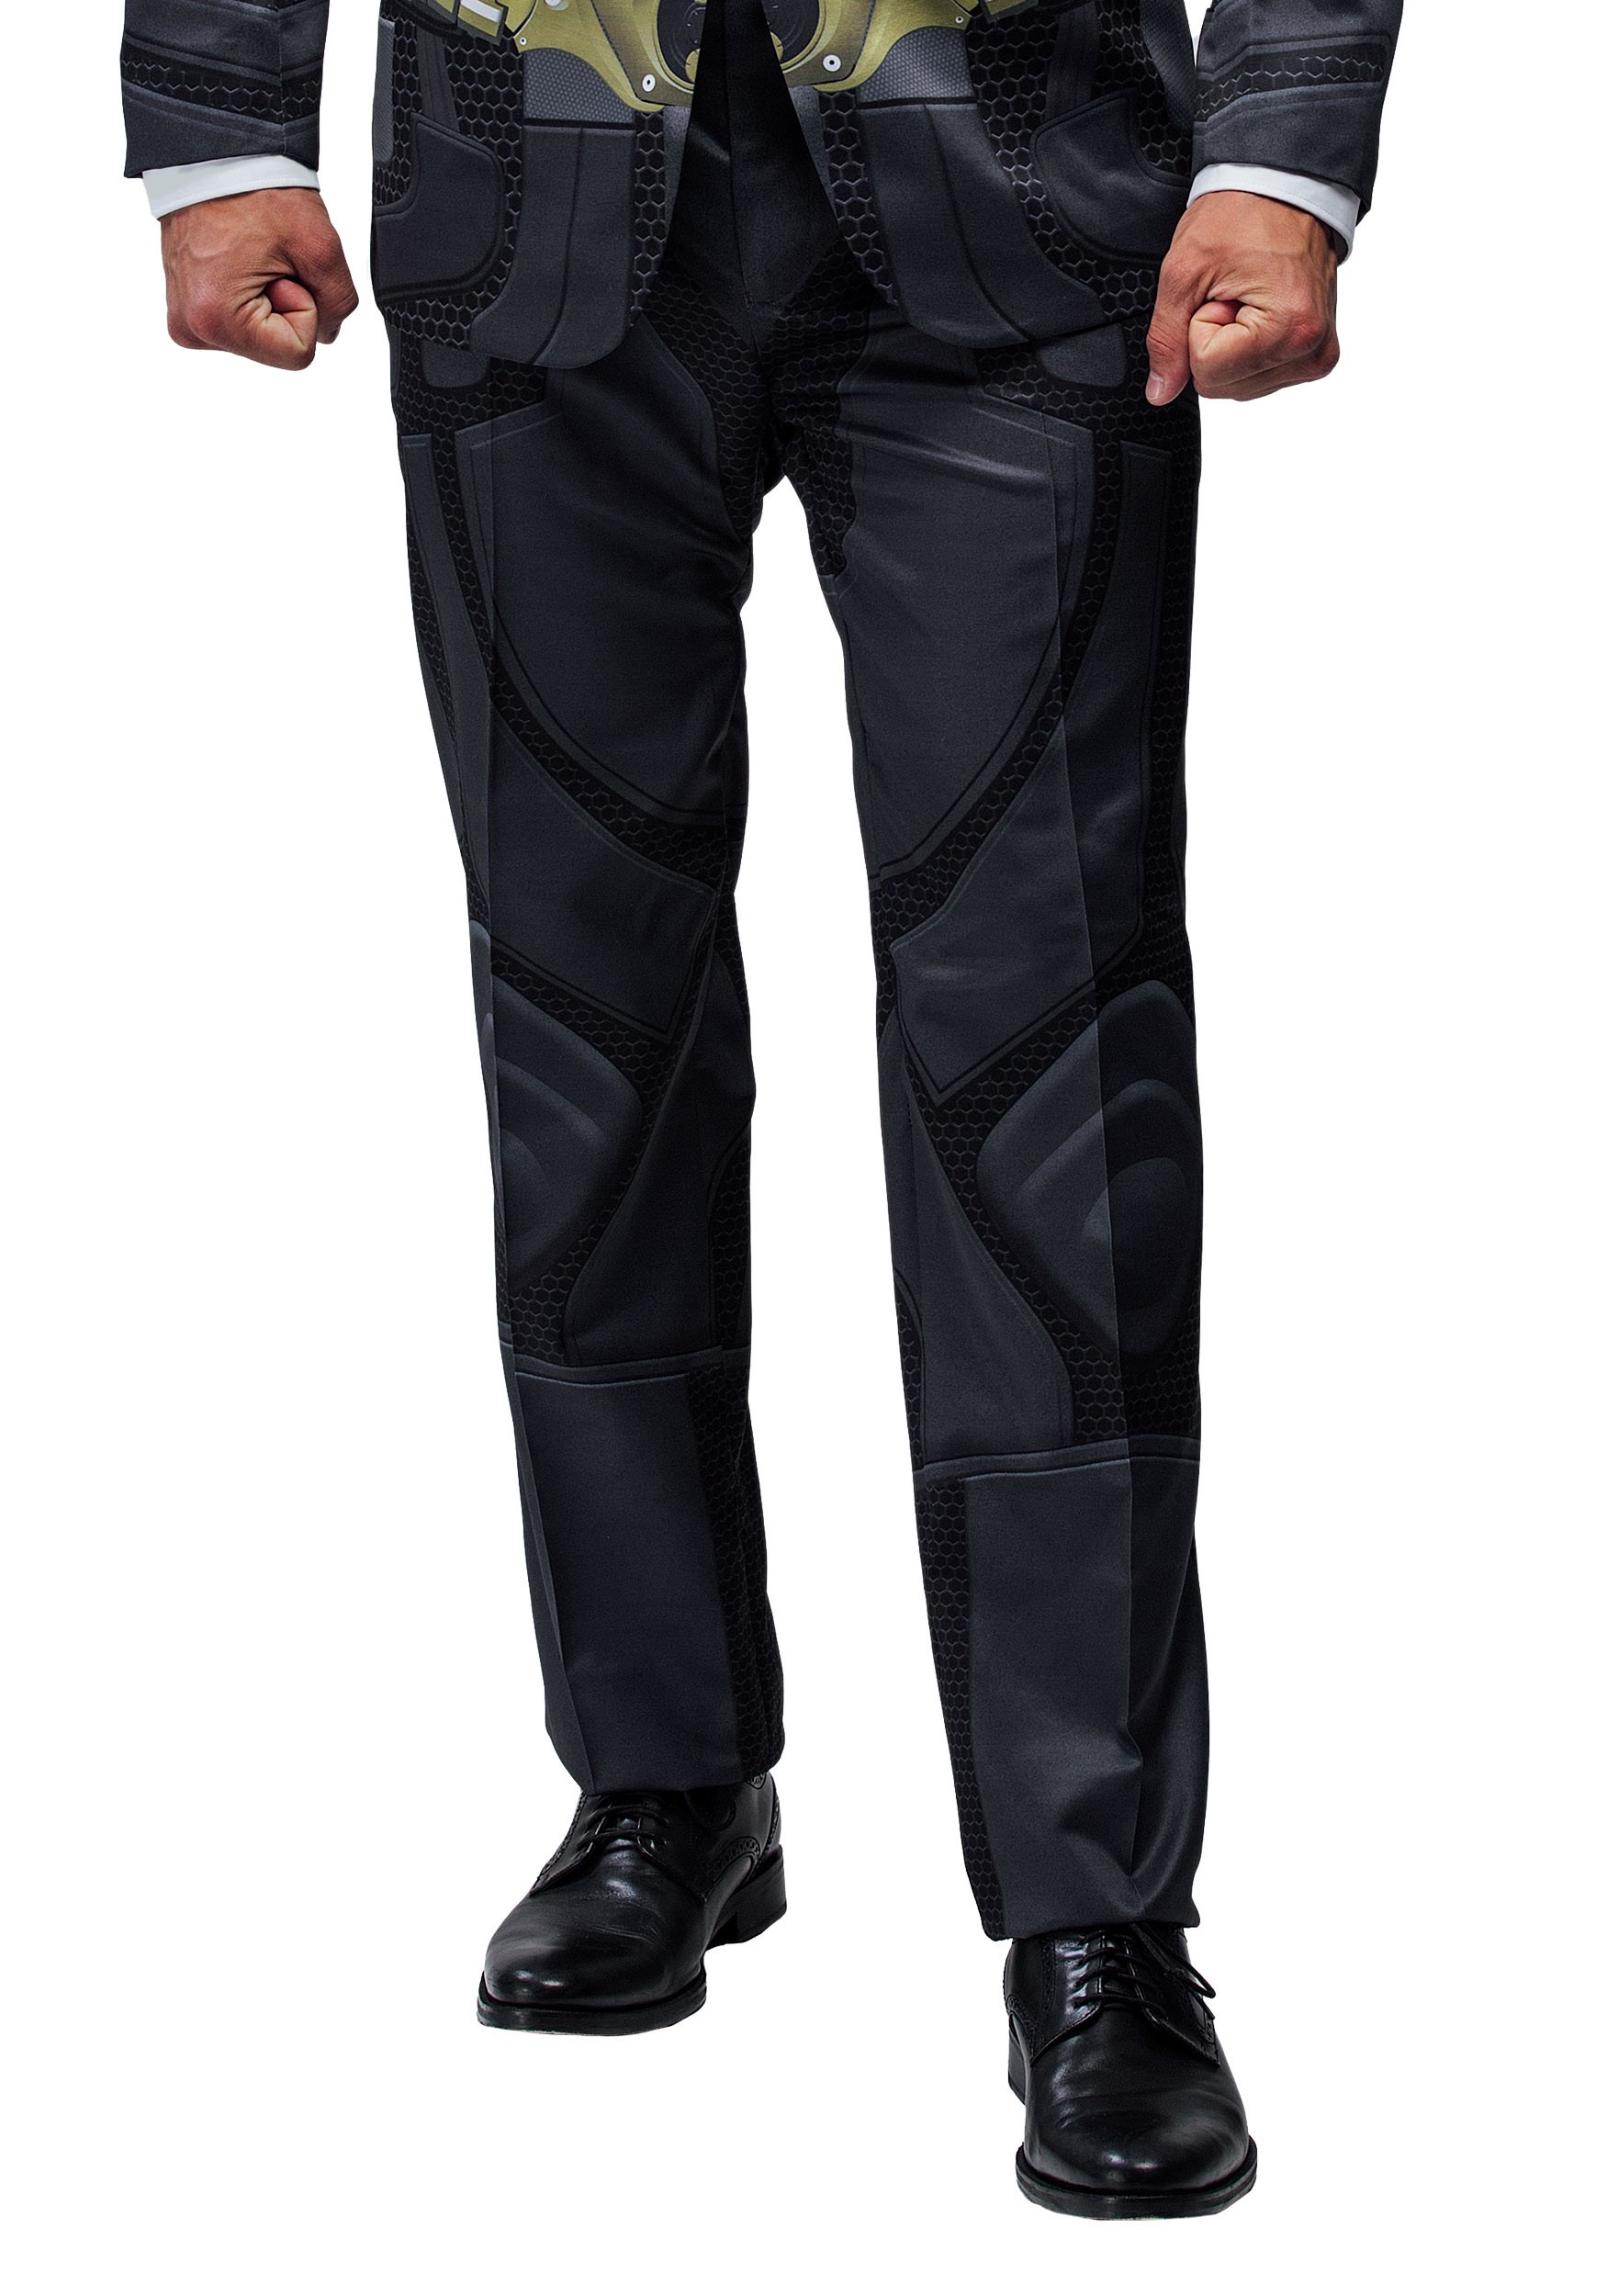 Alter Ego Dark Knight Slim Fit Suit Pants for Men